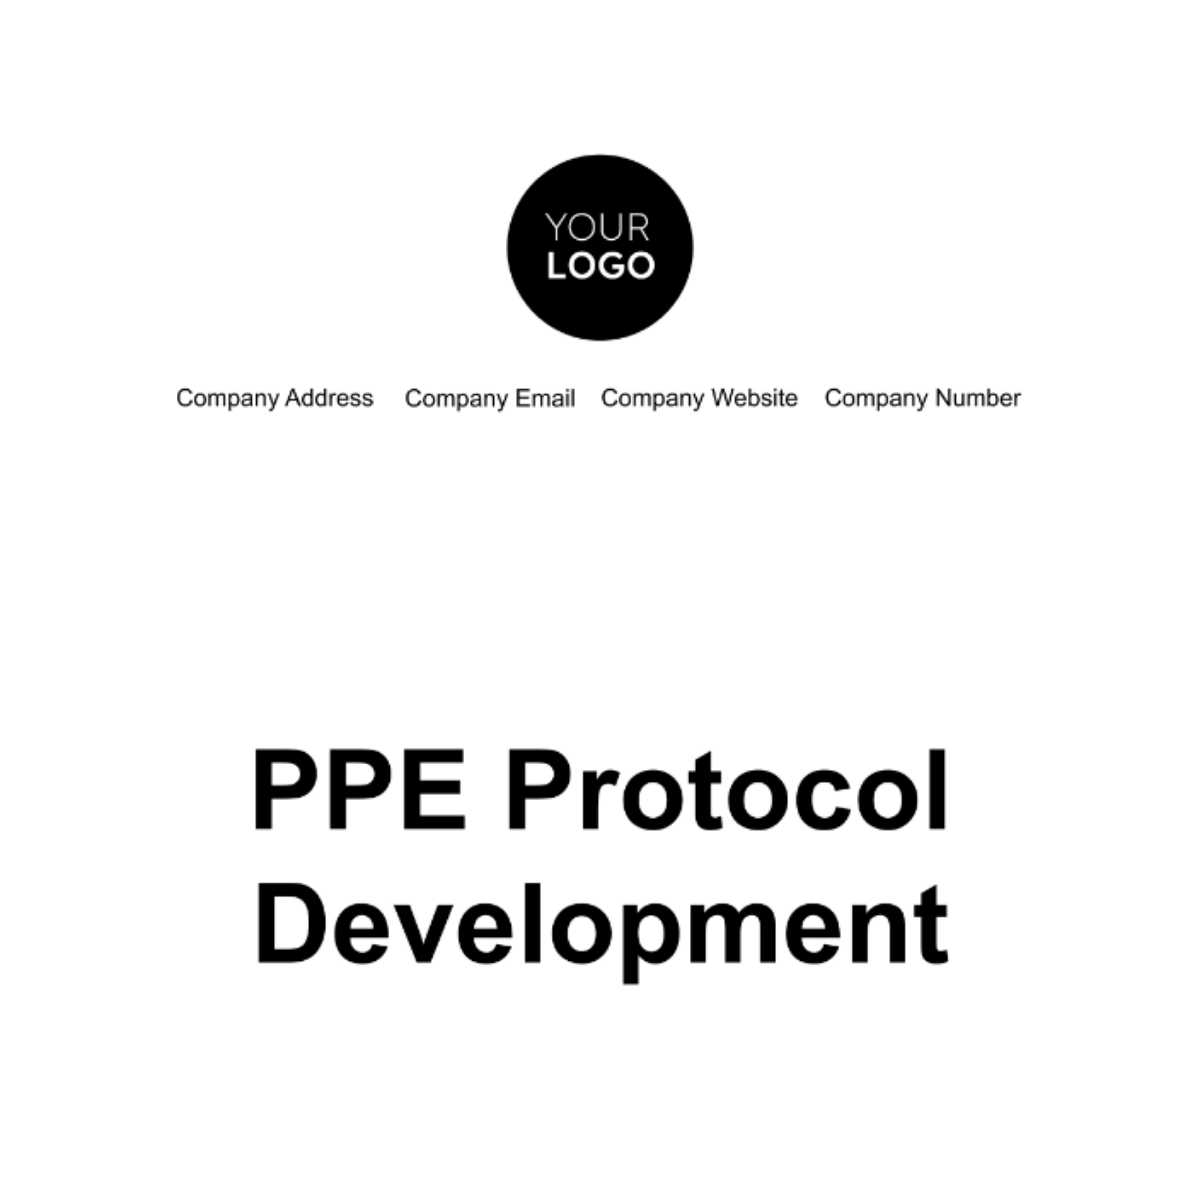 PPE Protocol Development Template